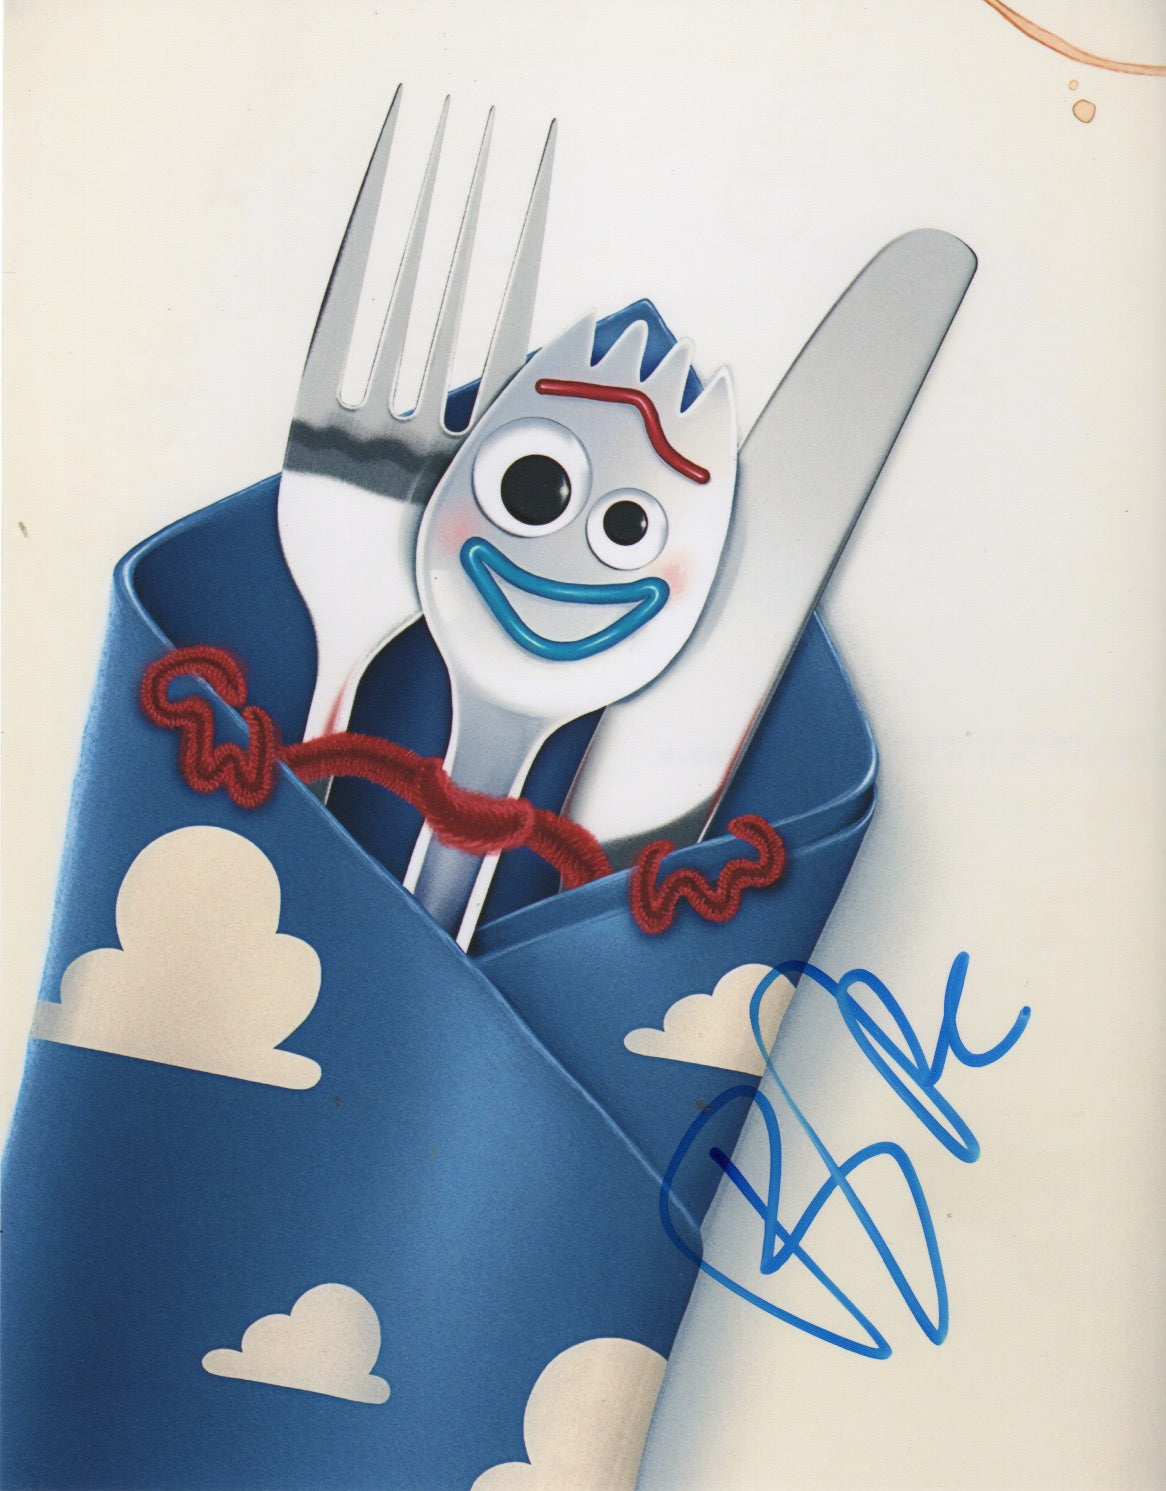 Tony Hale Toy Story Signed Autograph 8x10 Photo #2 - Outlaw Hobbies Authentic Autographs